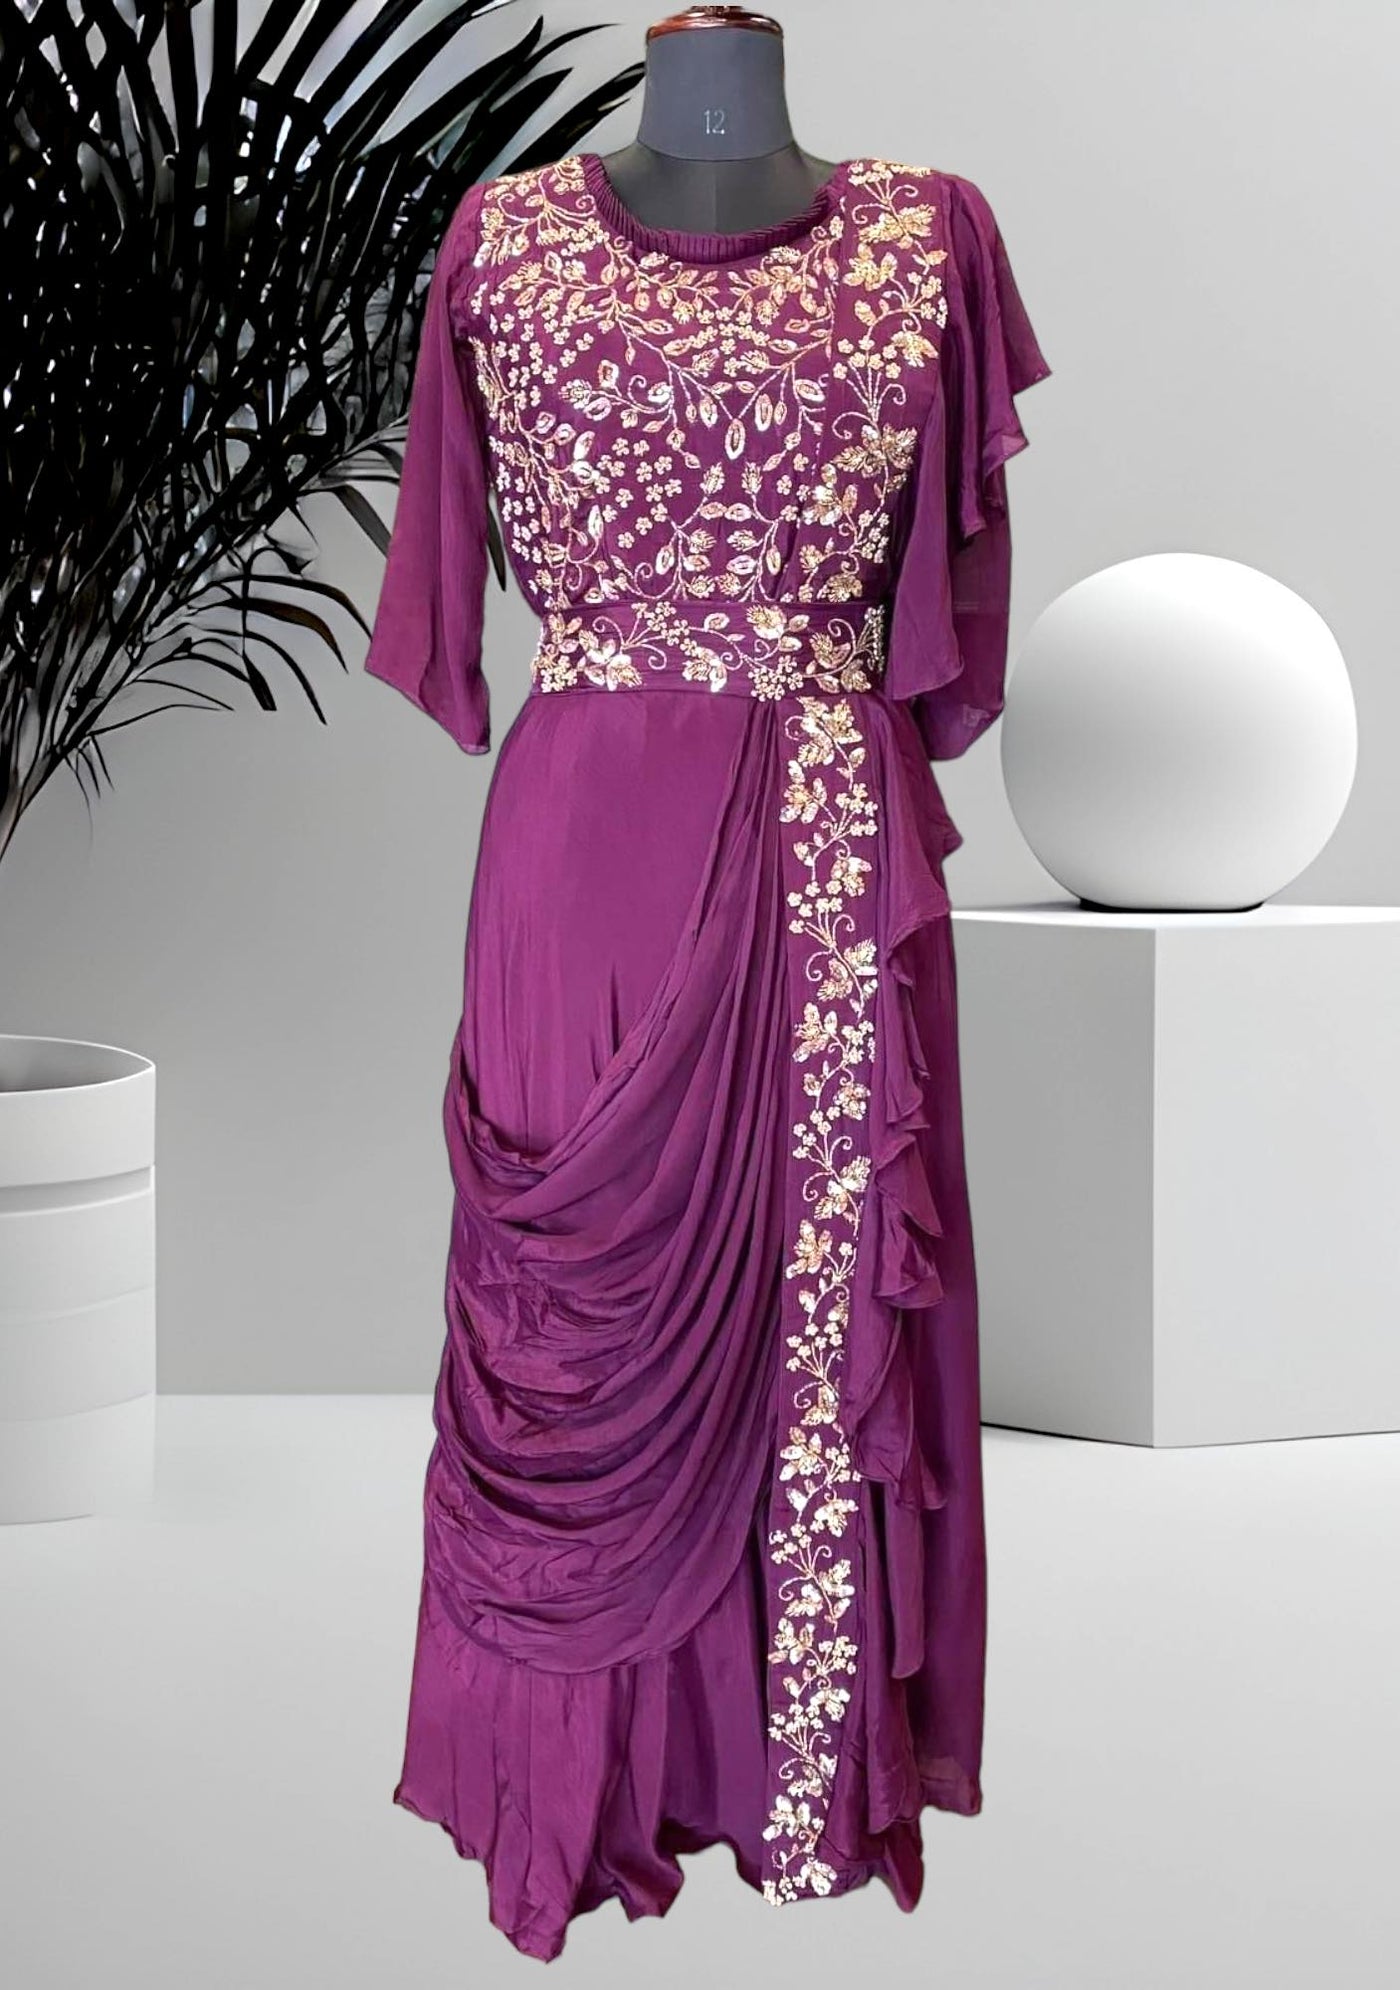 Saree gown idea | Long gown dress, Stylish dresses, Long dress design